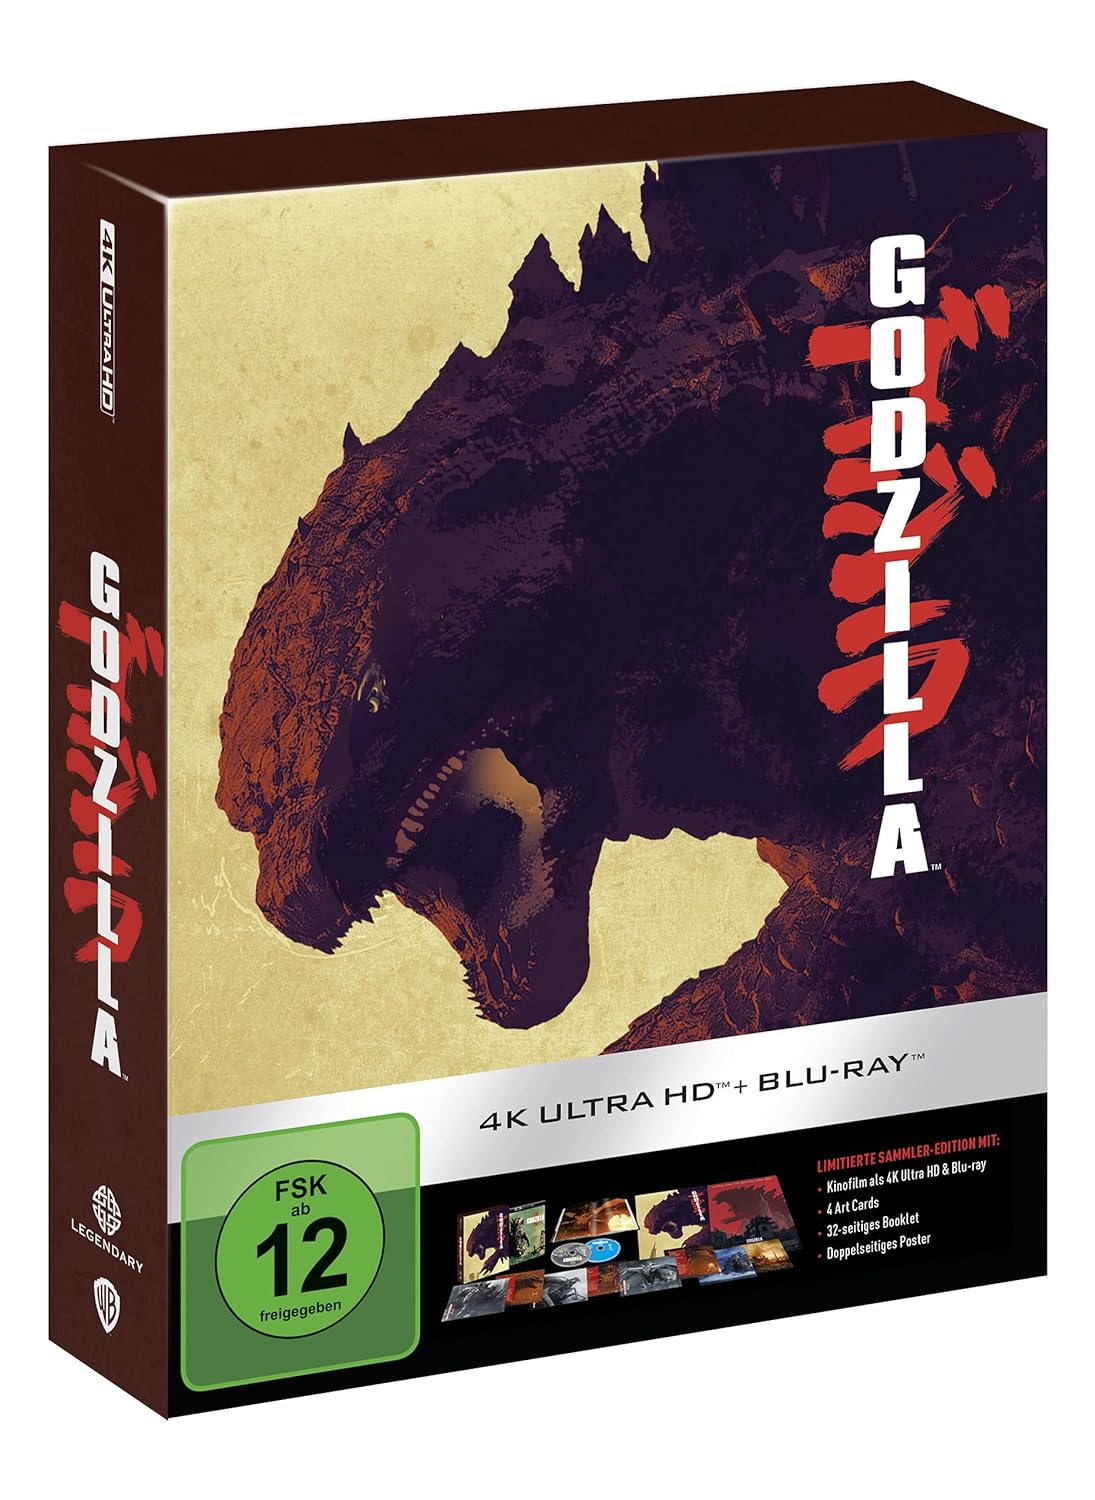 Godzilla 4K UHD [Blu-ray]